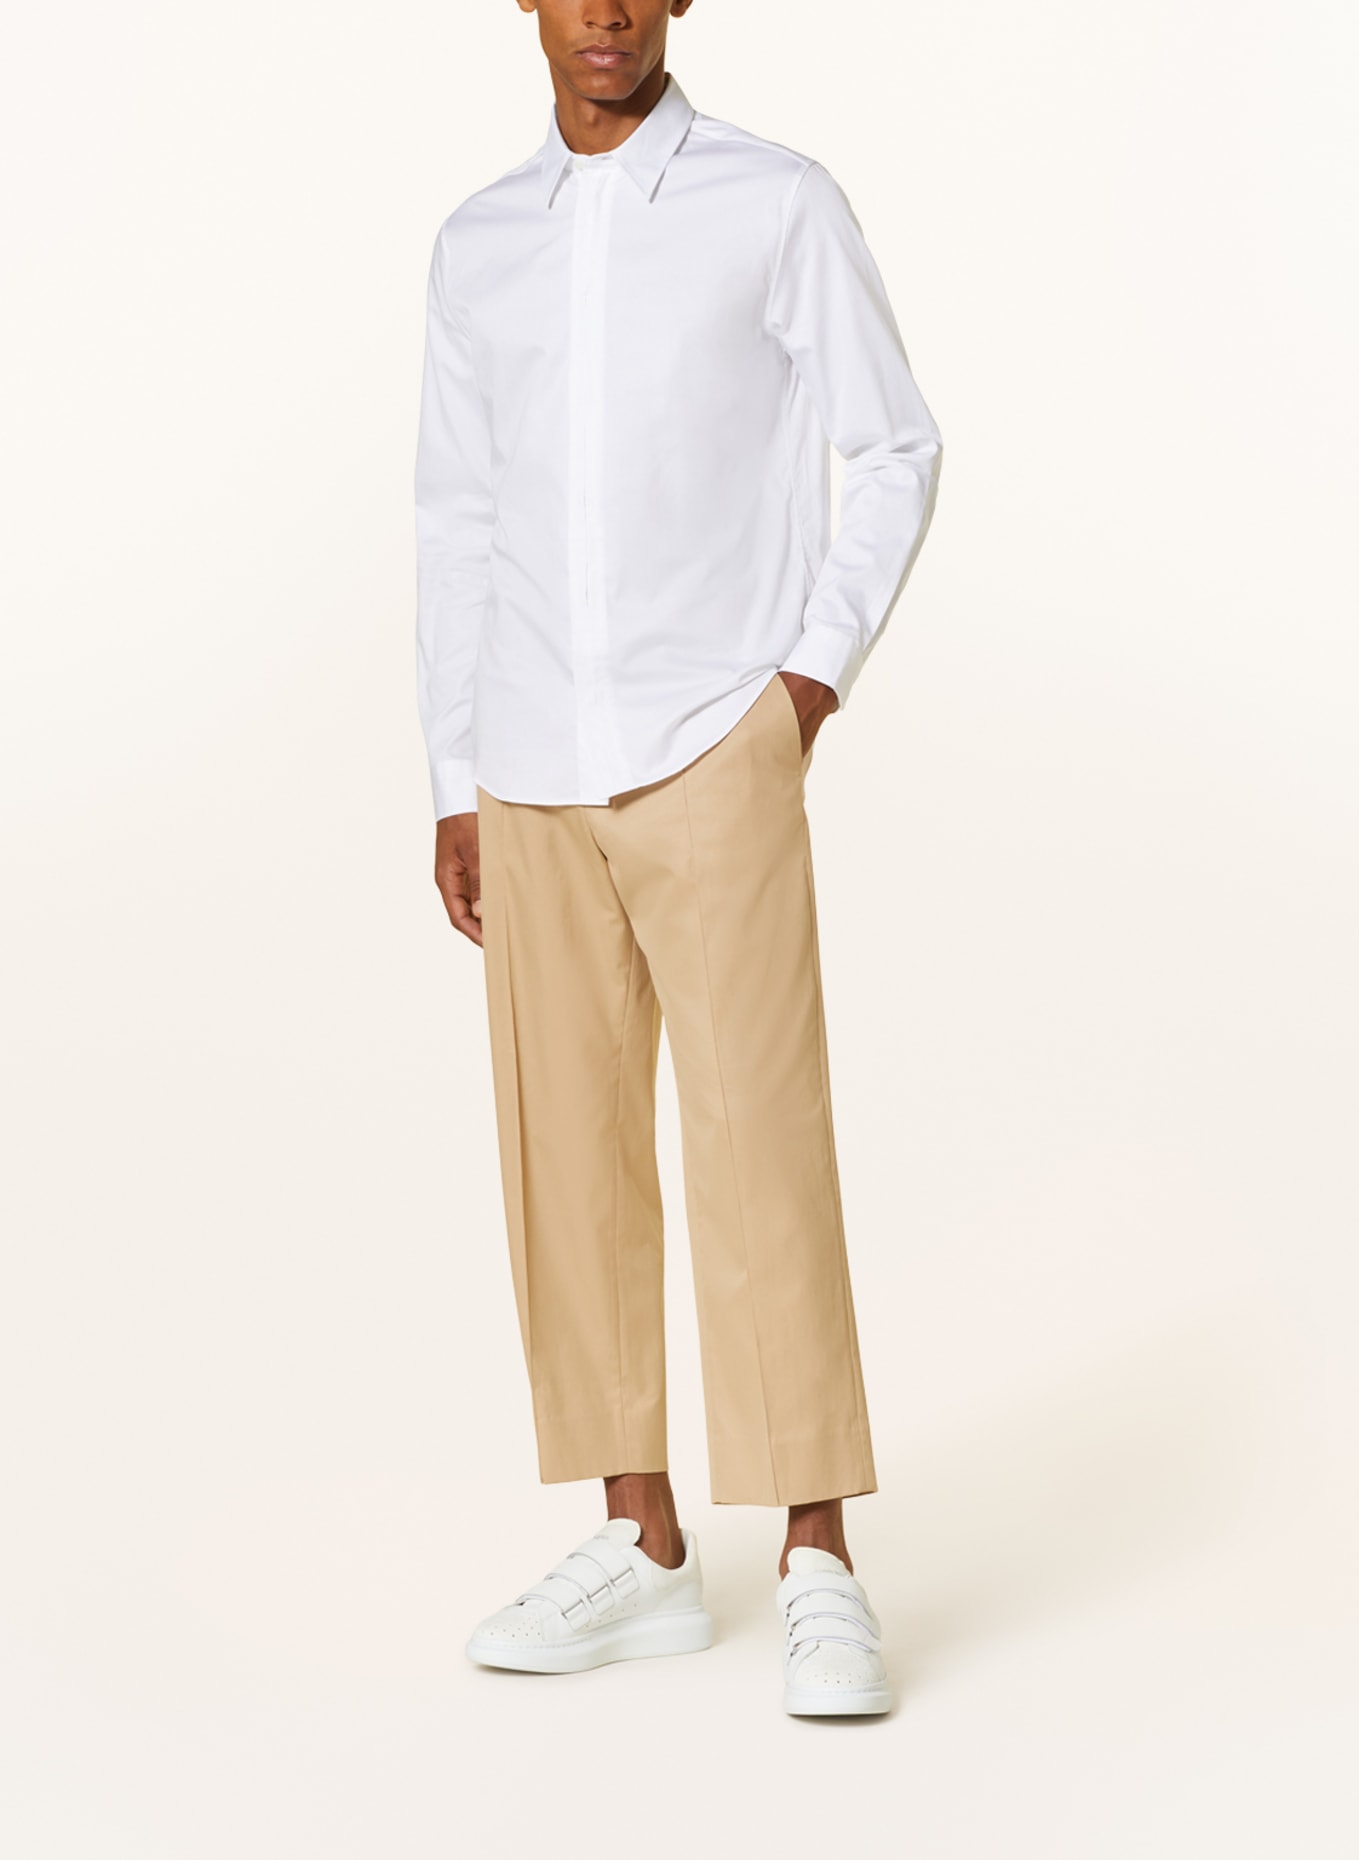 COS Regular-Fit Poplin Shirt in WHITE